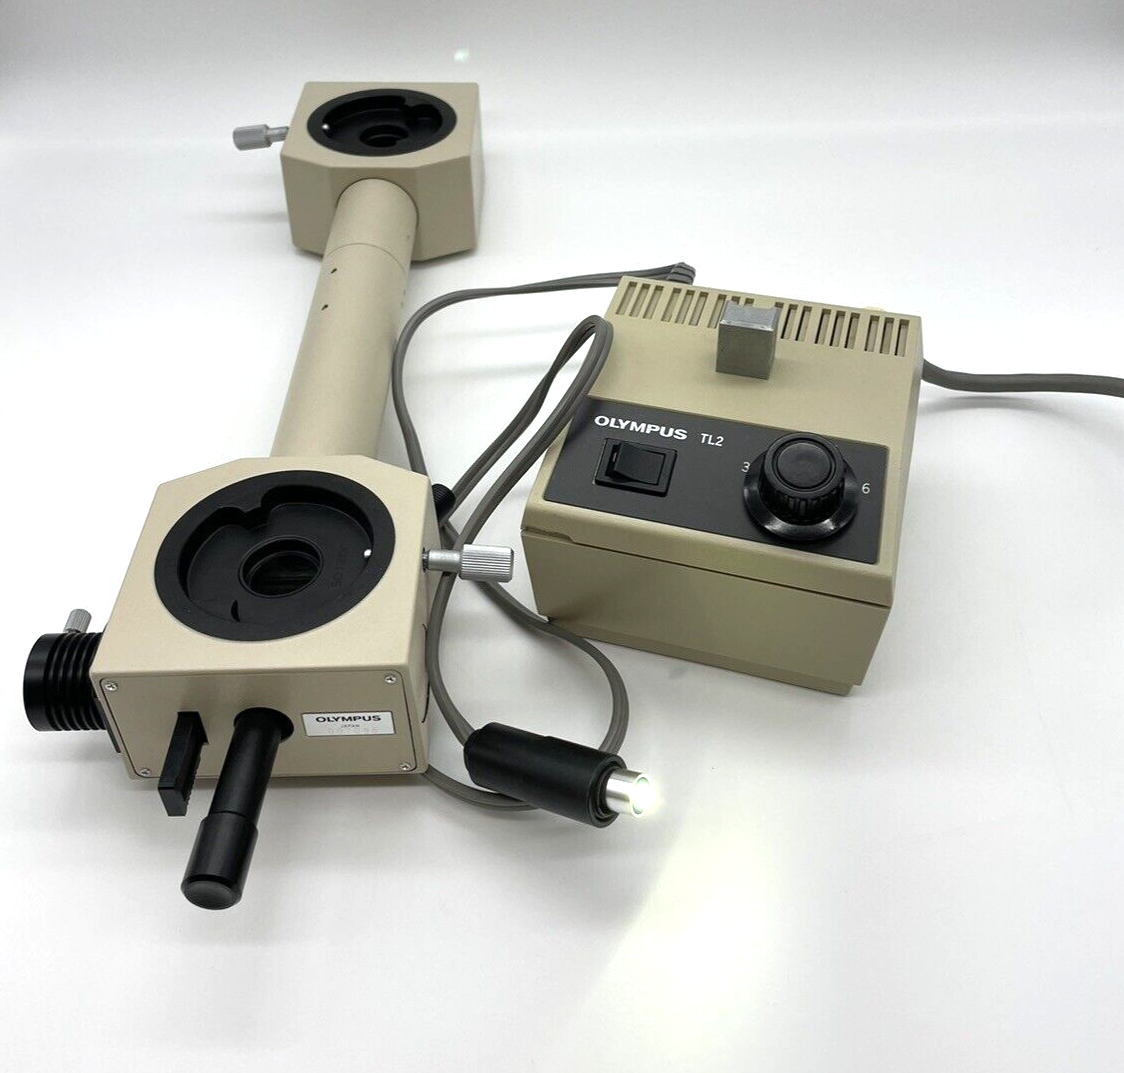 Olympus Microscope BH2 Dualhead Bridge with Pointer - microscopemarketplace